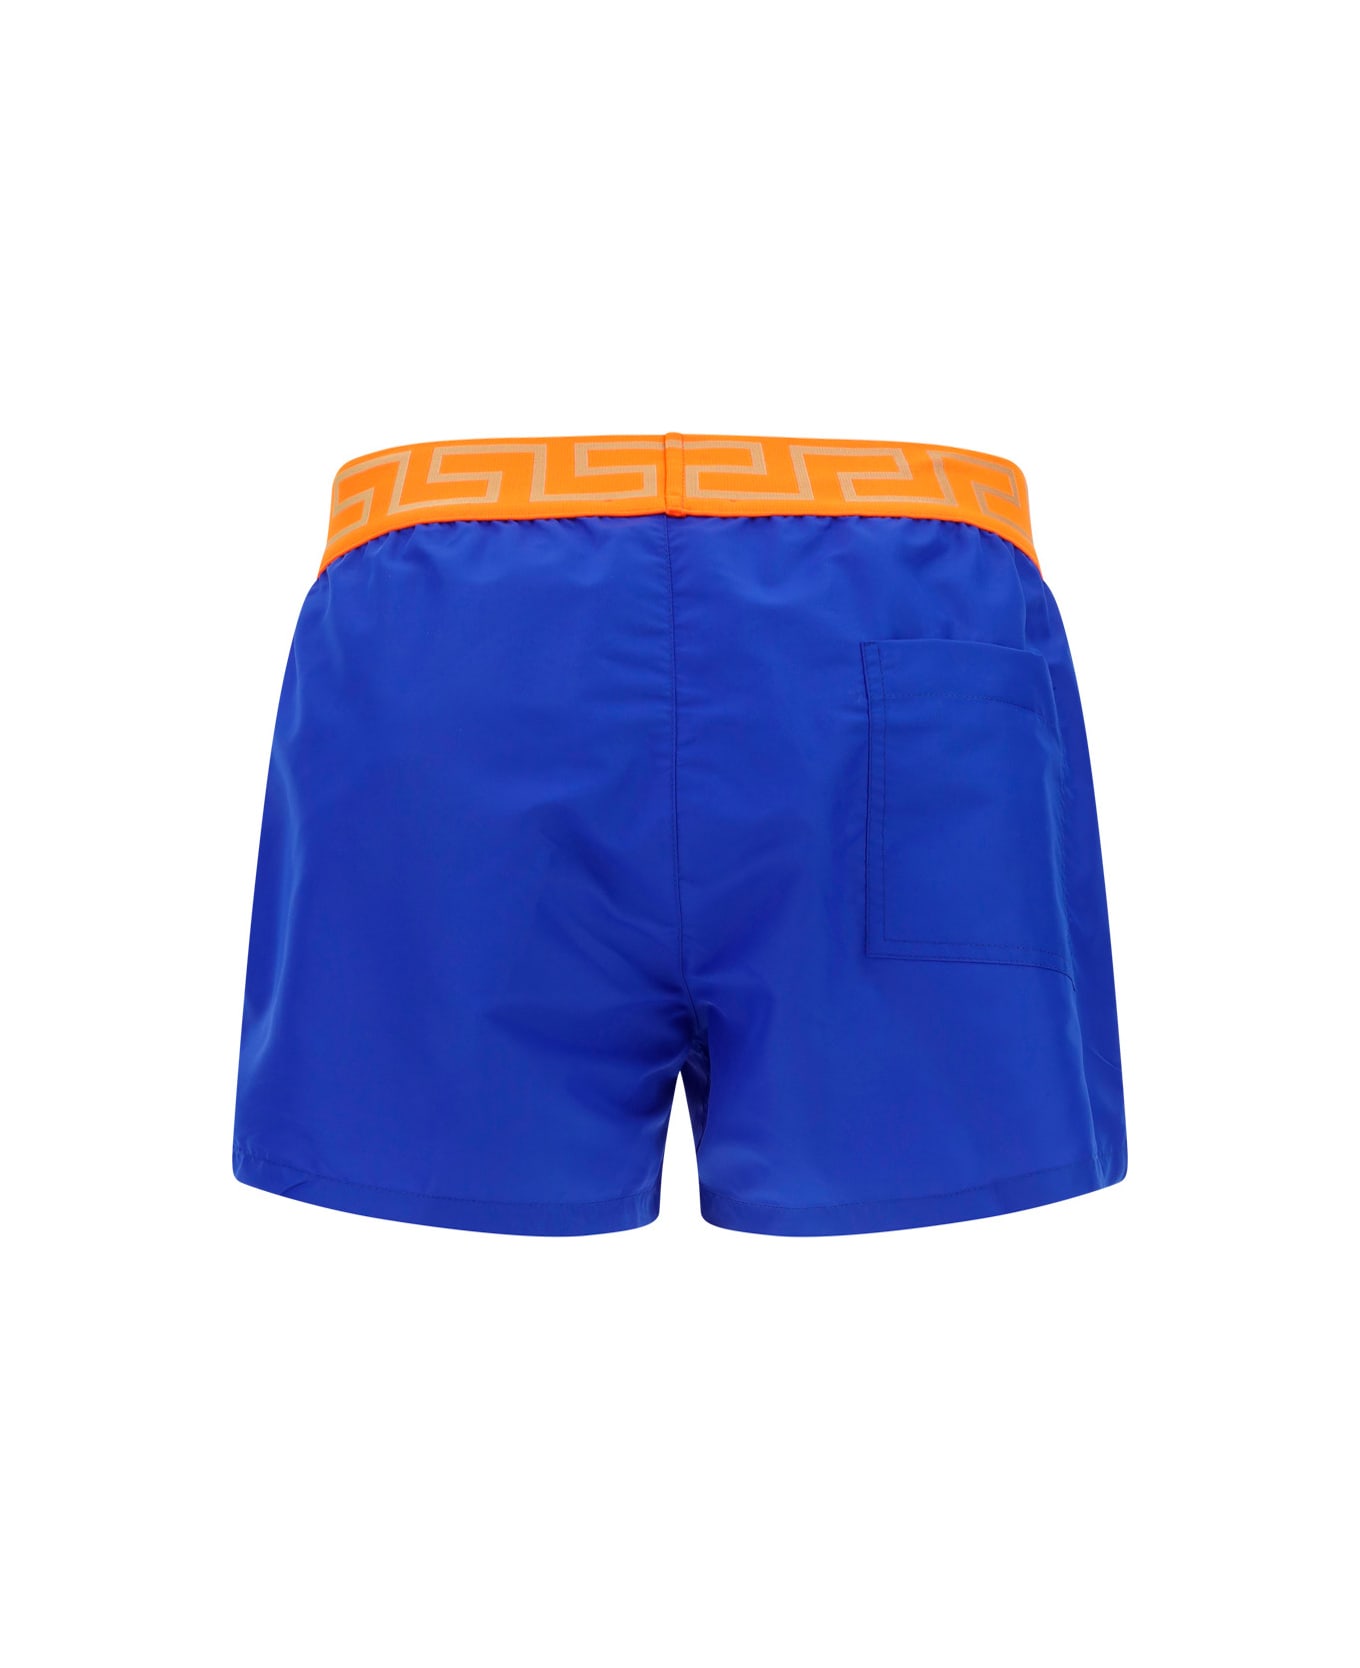 Versace Swimsuit - Cobalt+arancio Fluo ショーツ